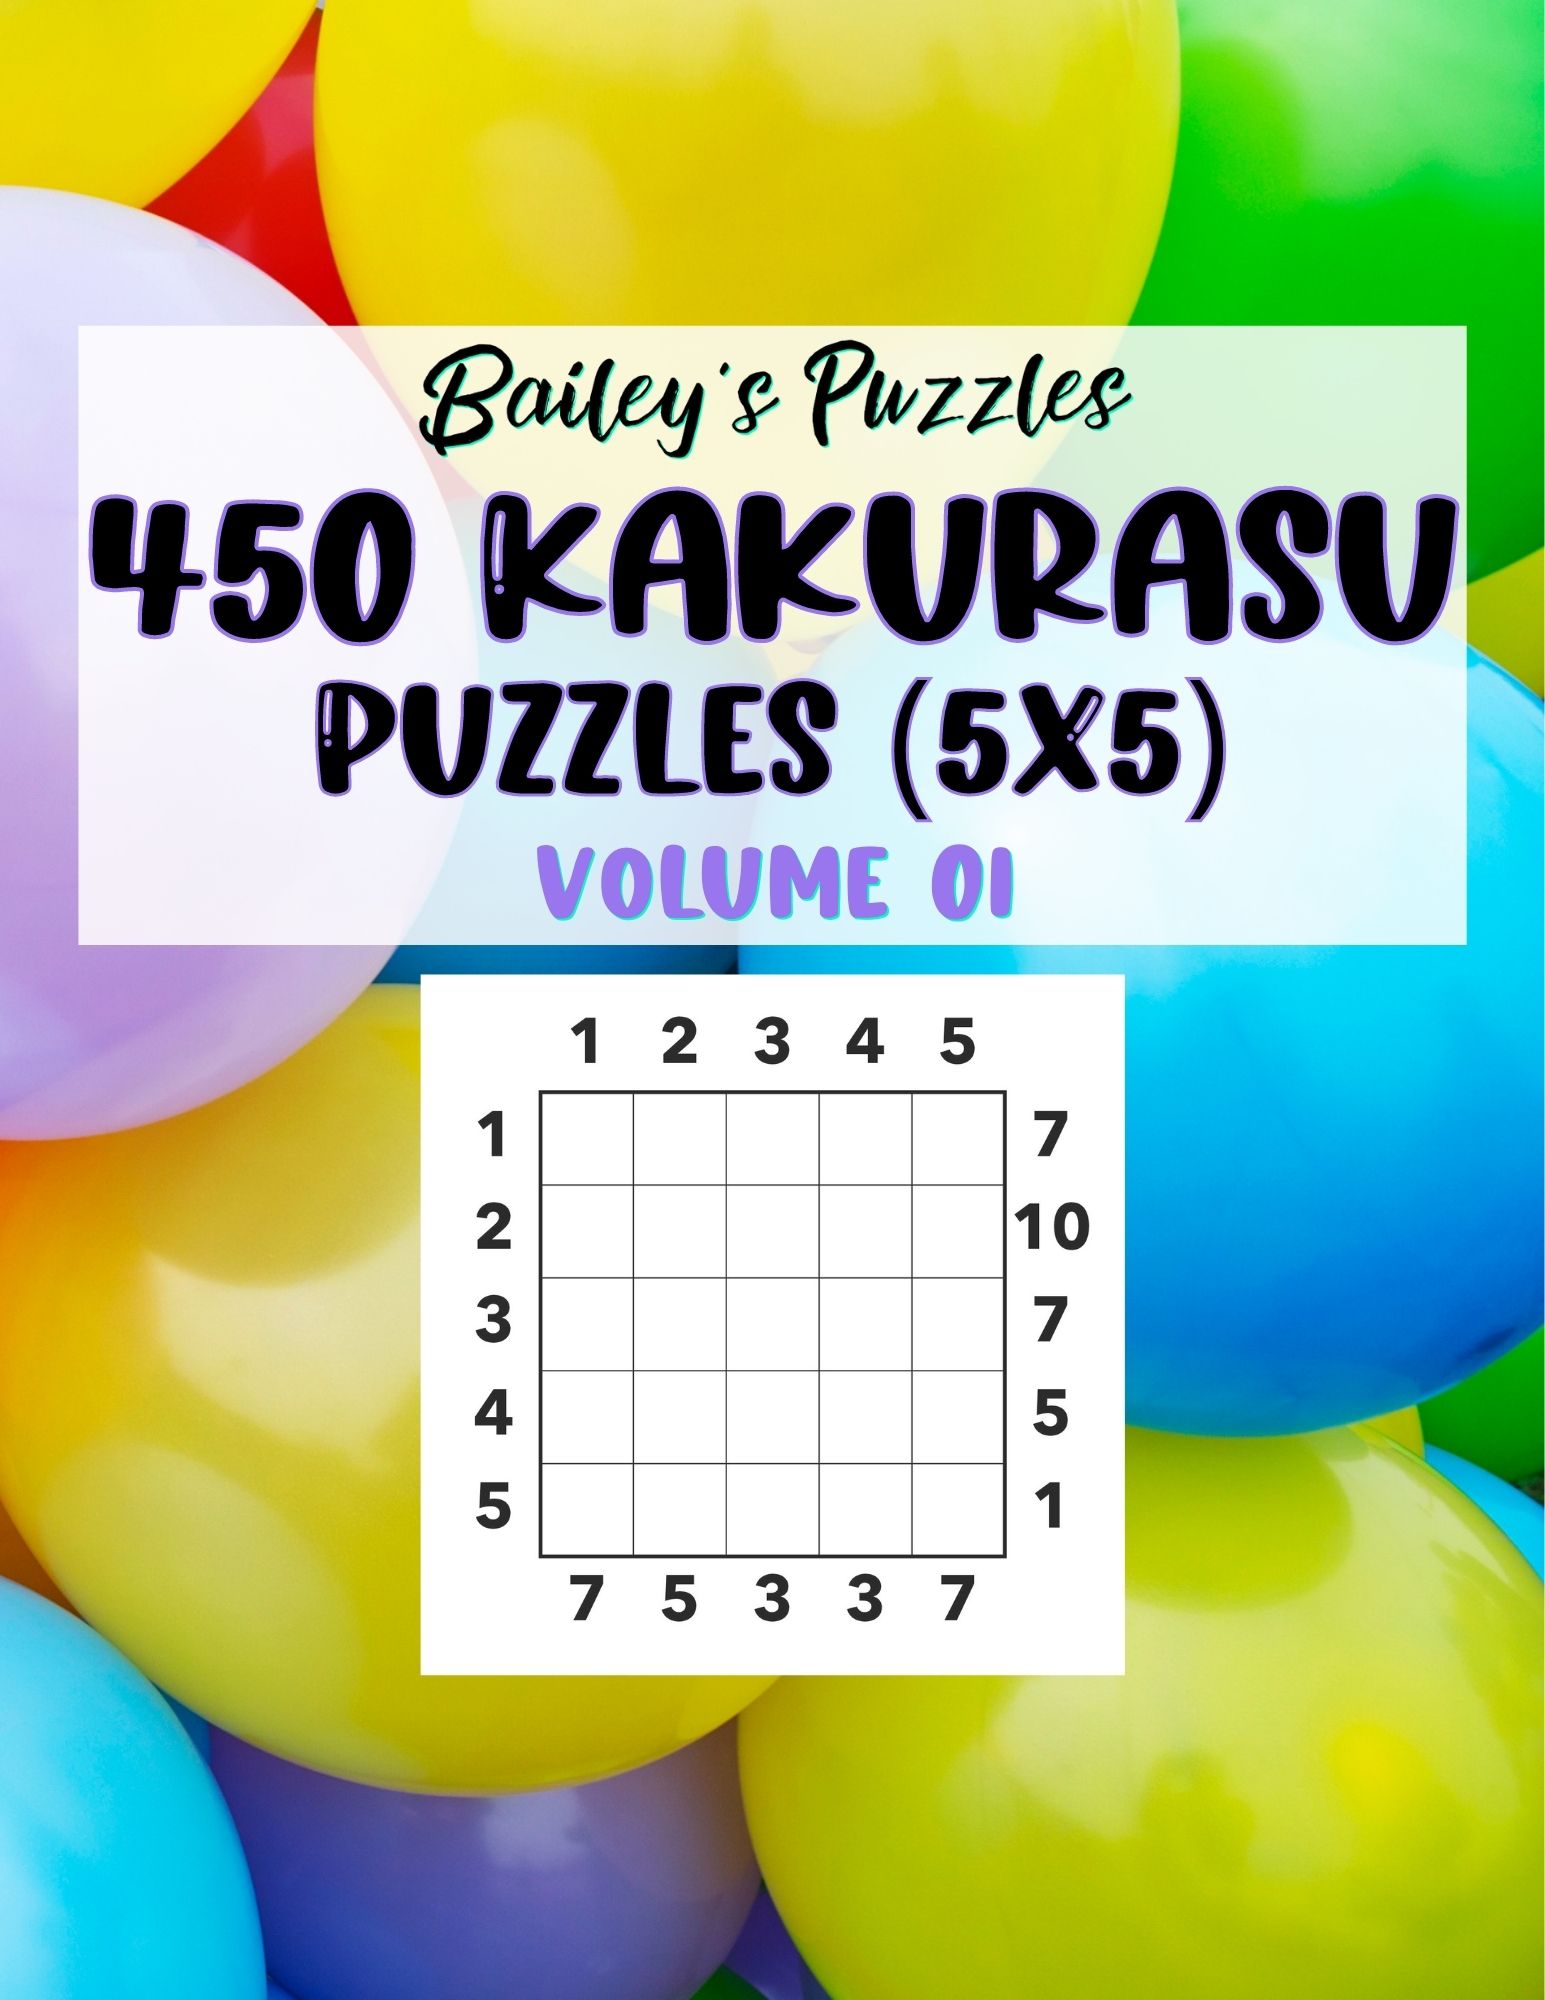 Buy Now: 450 Kakurasu Puzzles 5x5